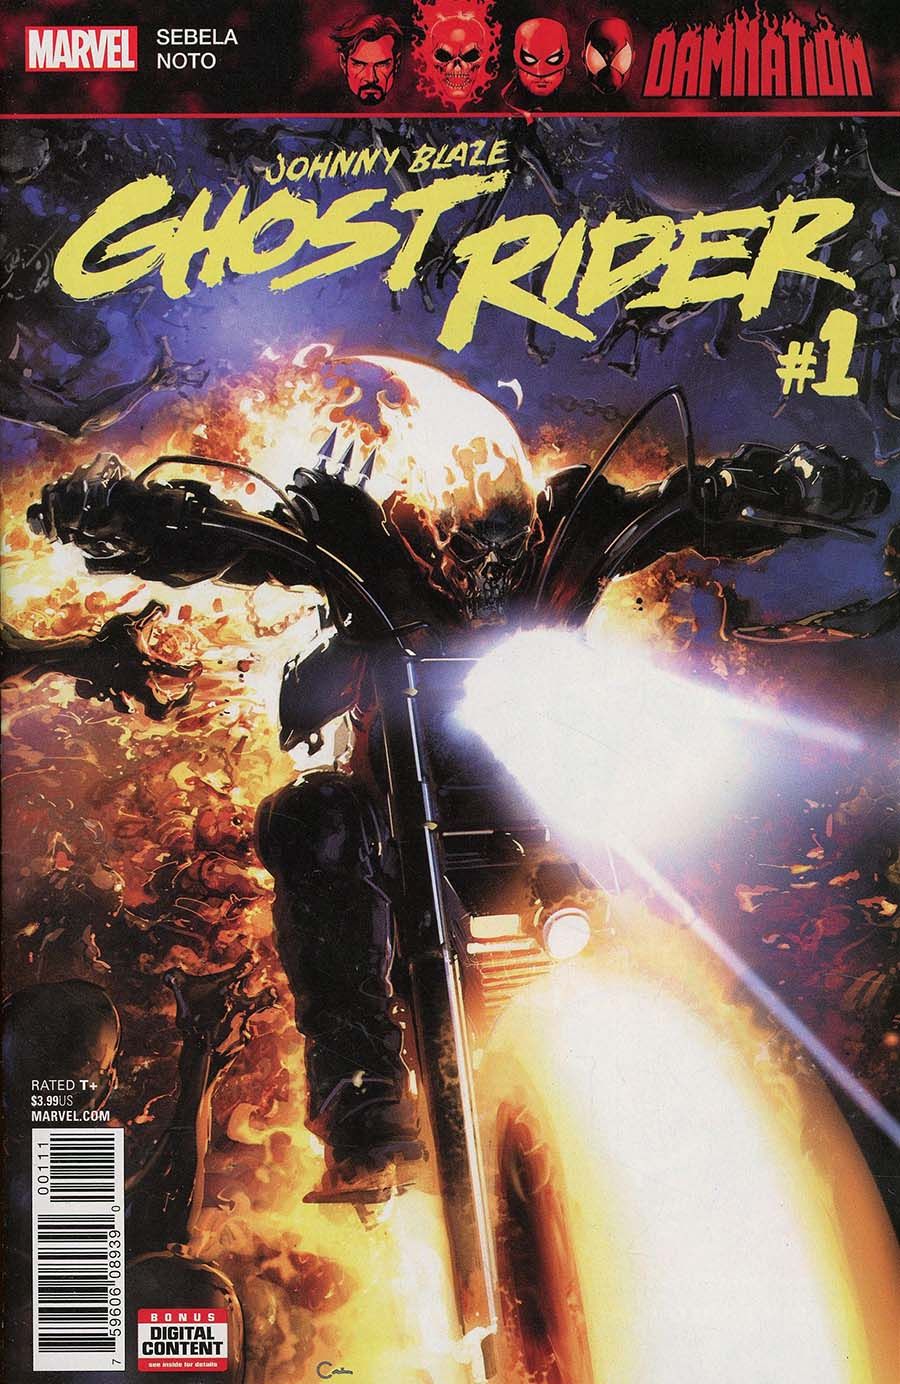 Damnation: Johnny Blaze - Ghost Rider #1 Comic